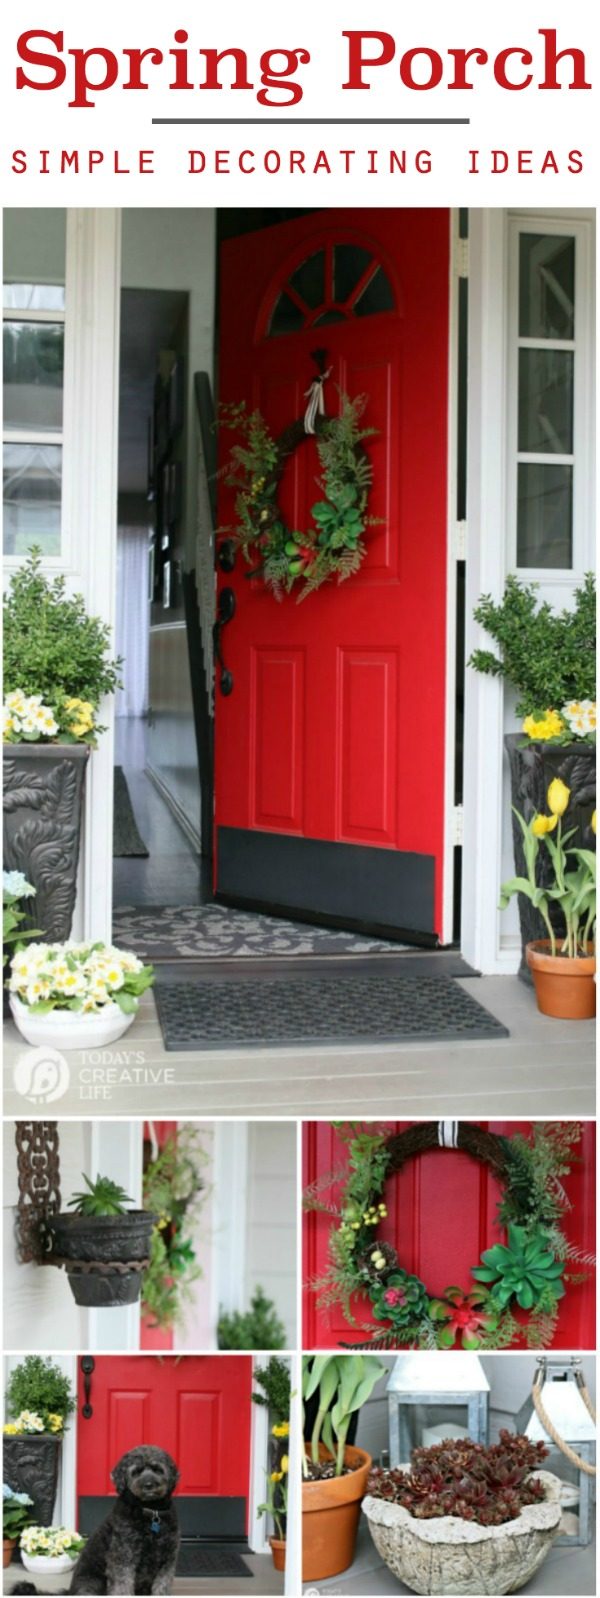 Front Porch Ideas | Decorating your porch for Spring. Small front porch simple DIY decorating ideas for spring. TodaysCreativeLife.com